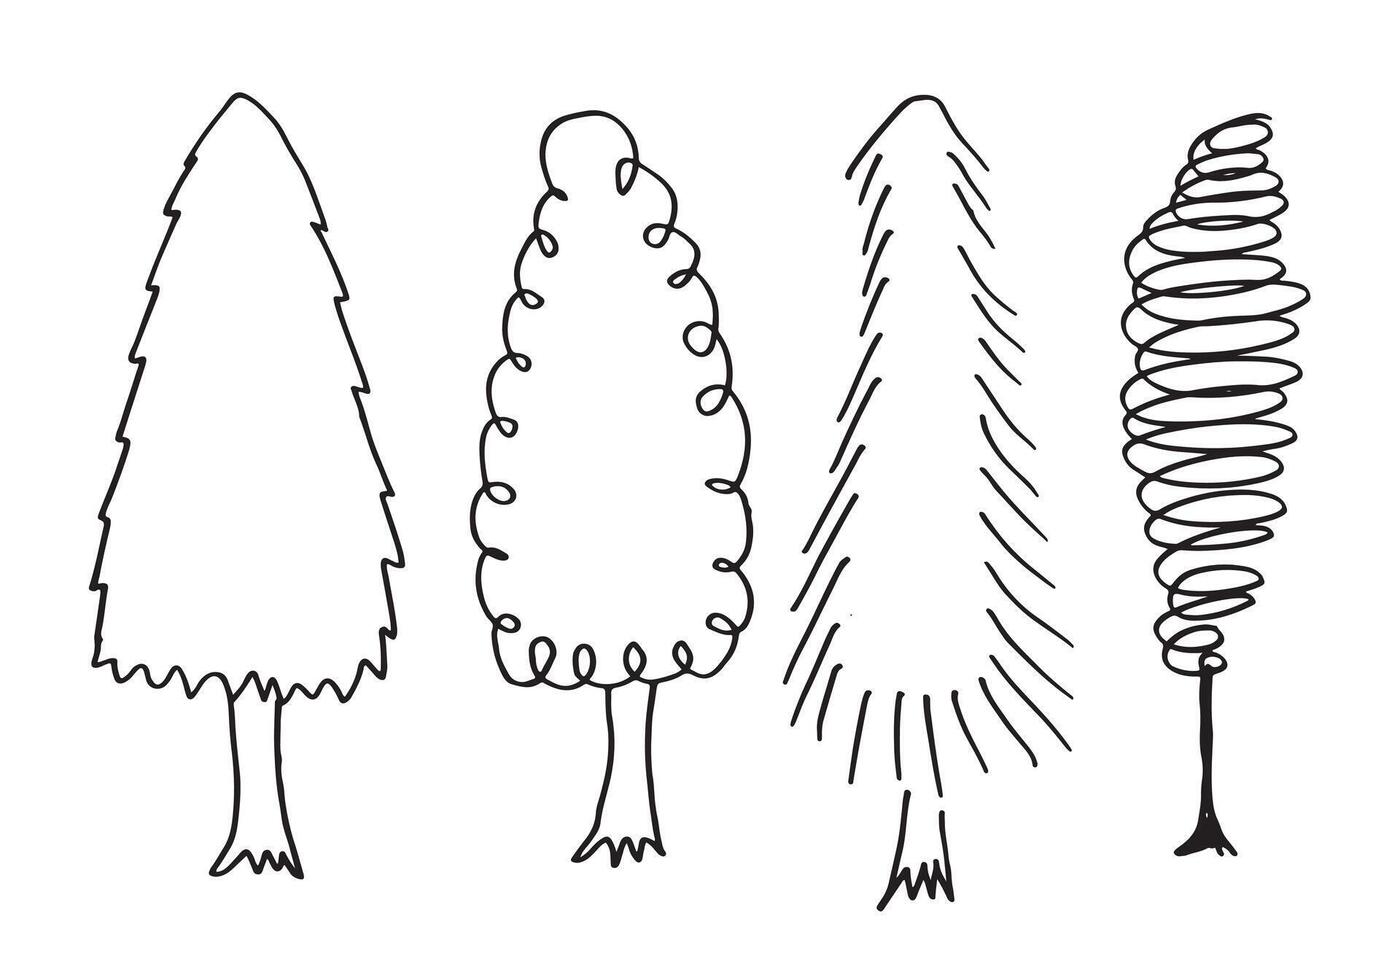 doodle park forest coníferas silhuetas abstratas árvores delineadas em conjunto de coleta de cor preta vetor